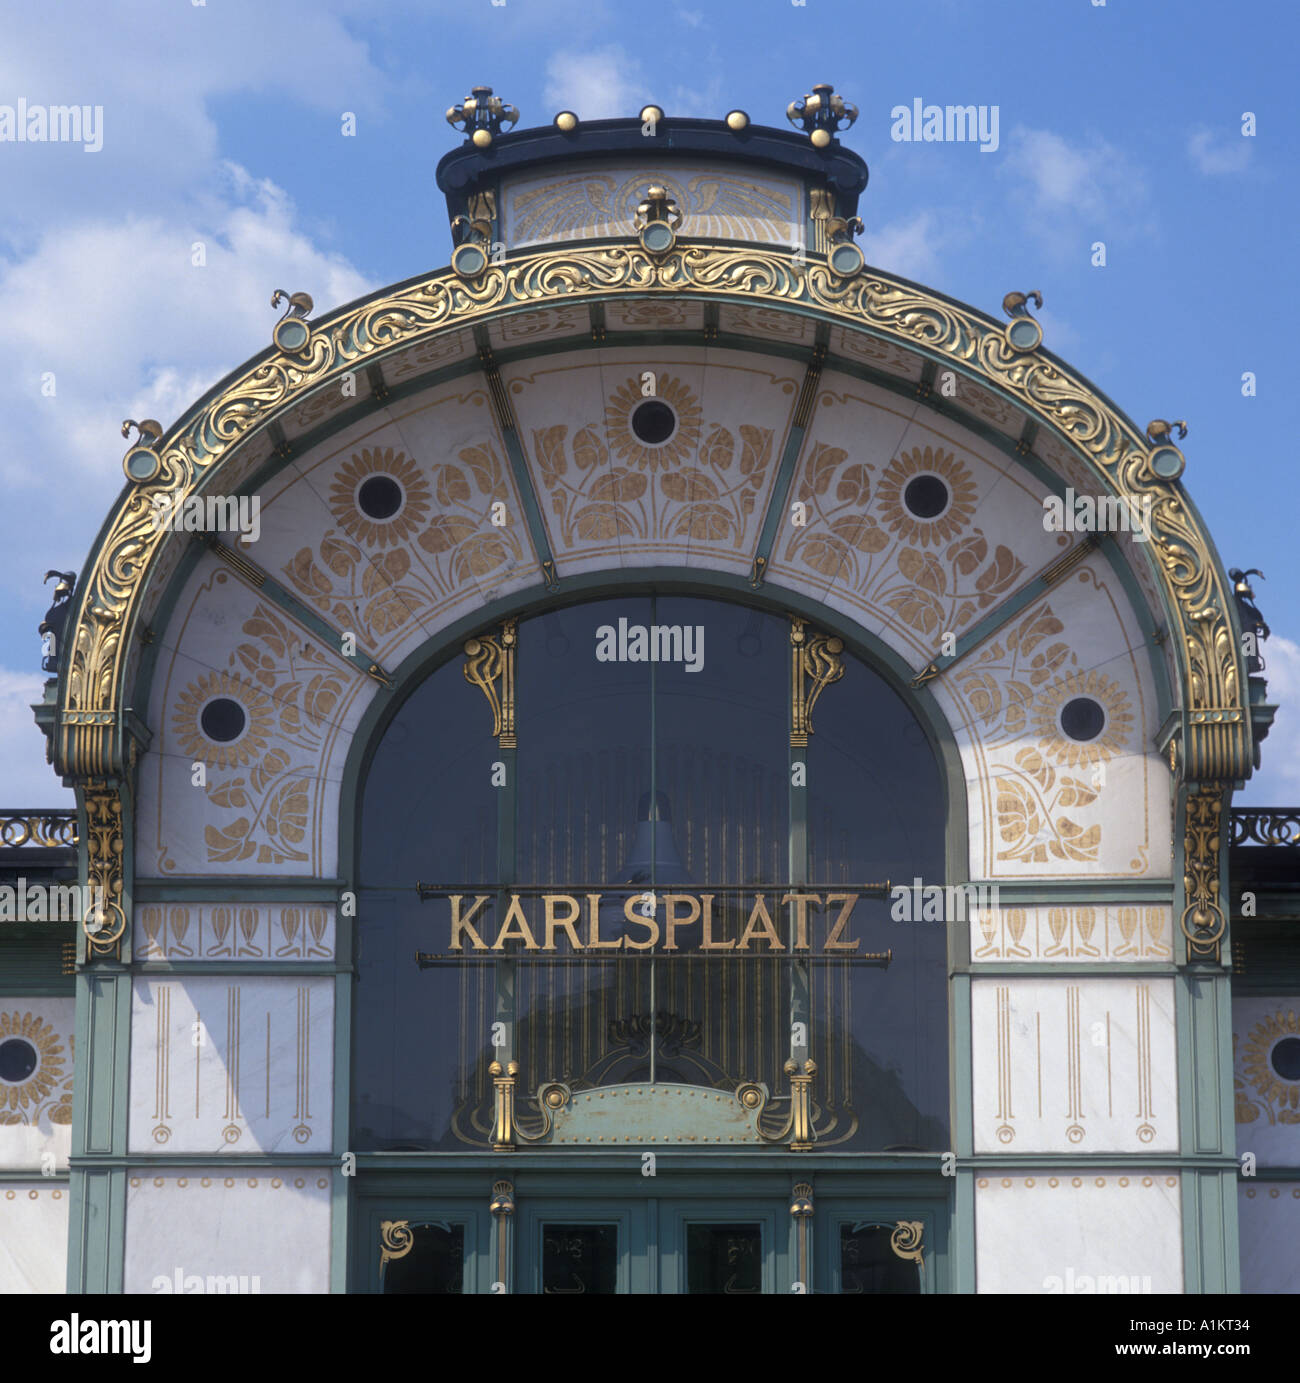 Karlsplatz La stazione della metropolitana di architettura Jugendstil da Otto Wagner a Vienna Austria Foto Stock